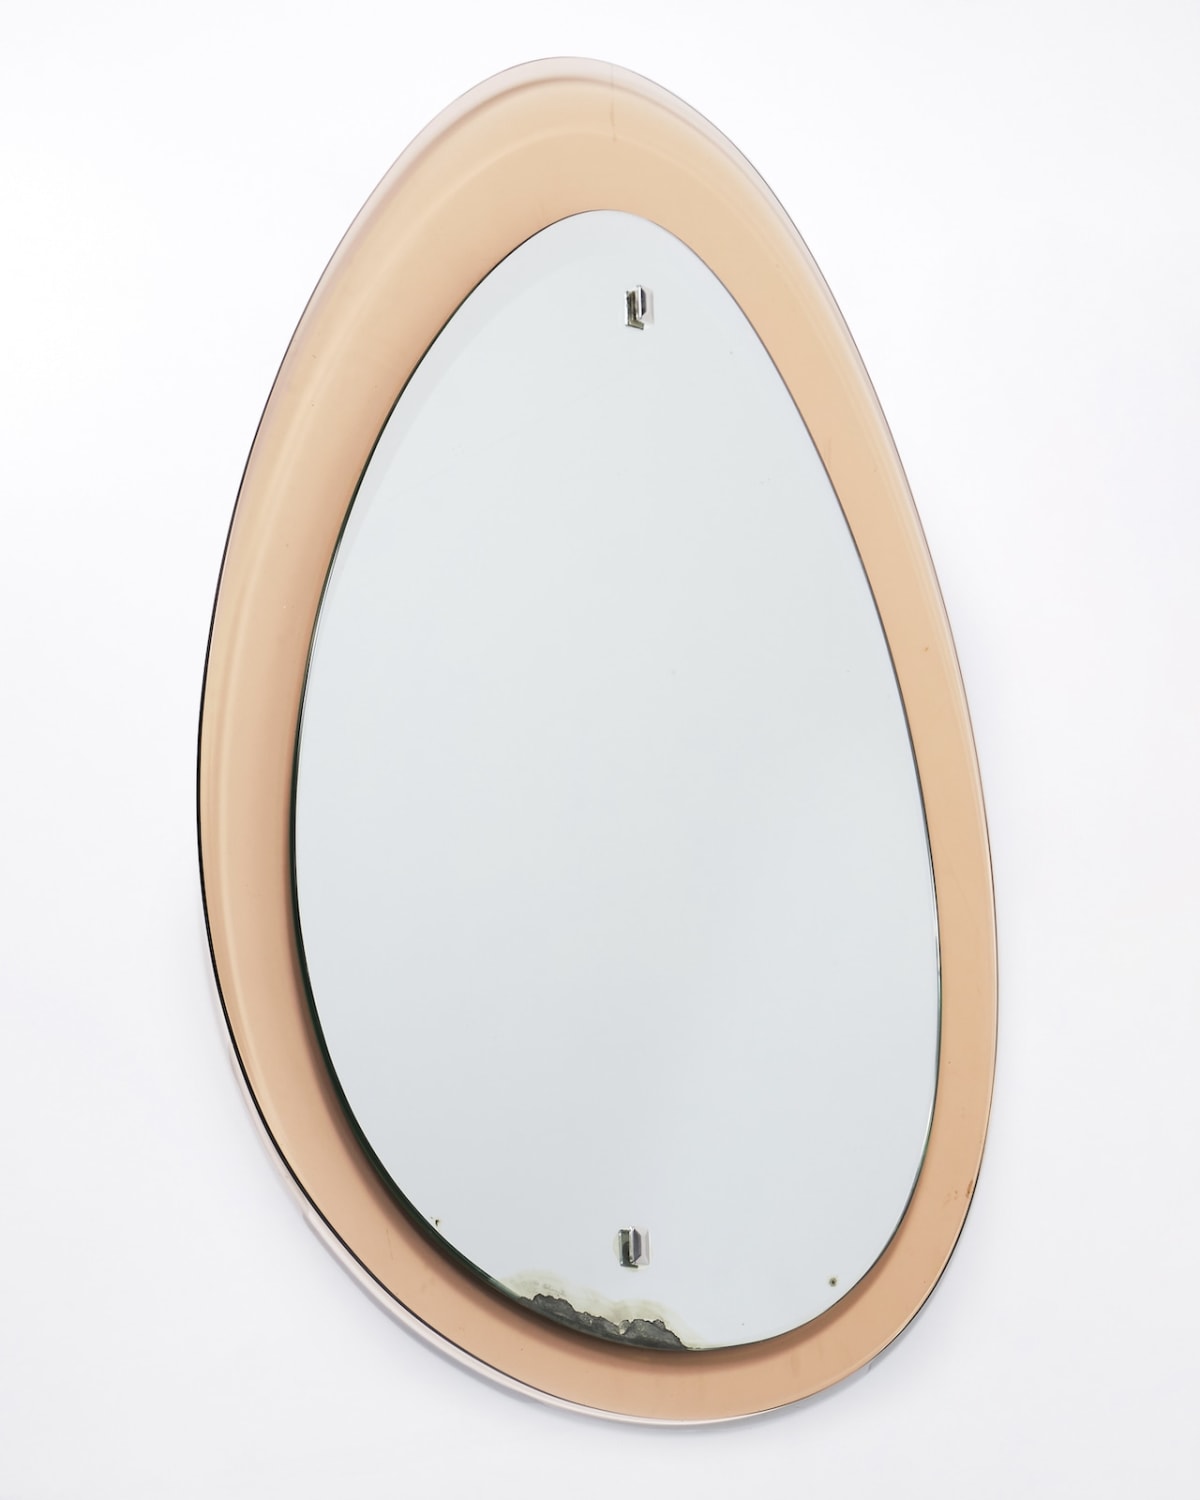 Jasanmaxmirror 12pcs 8inch Round Mirror Plates, Edges Polished, Round Mirrors for Centerpieces